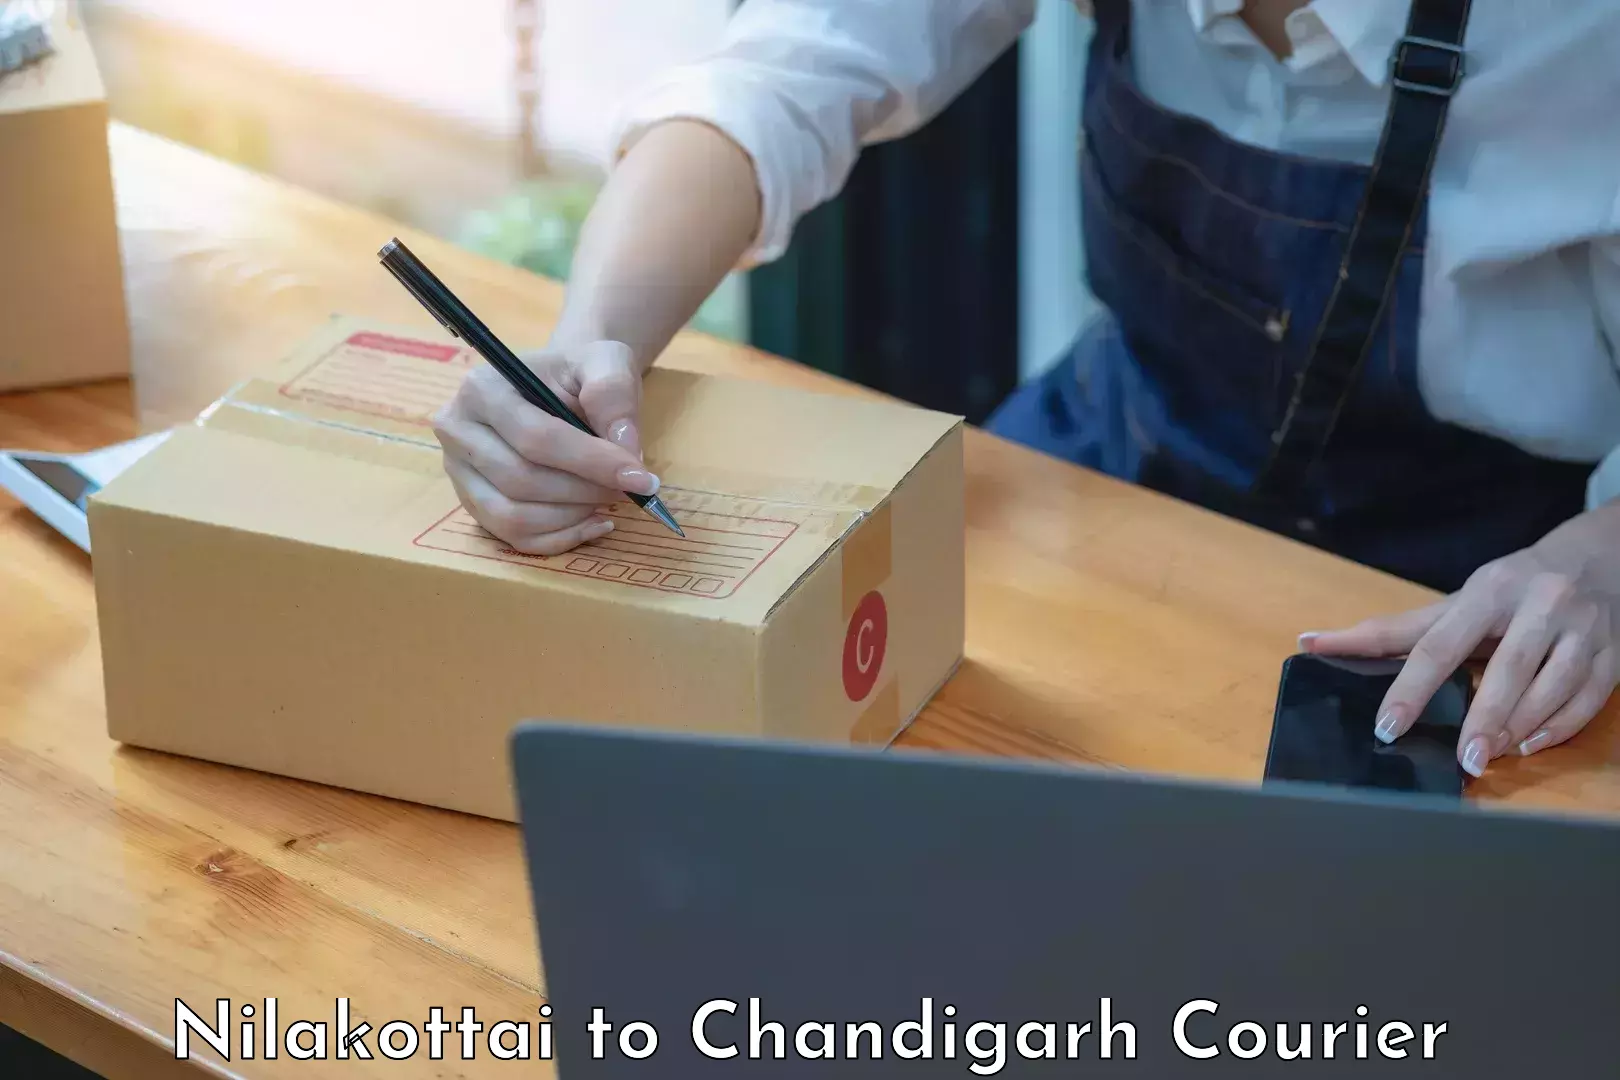 Luggage delivery app Nilakottai to Chandigarh